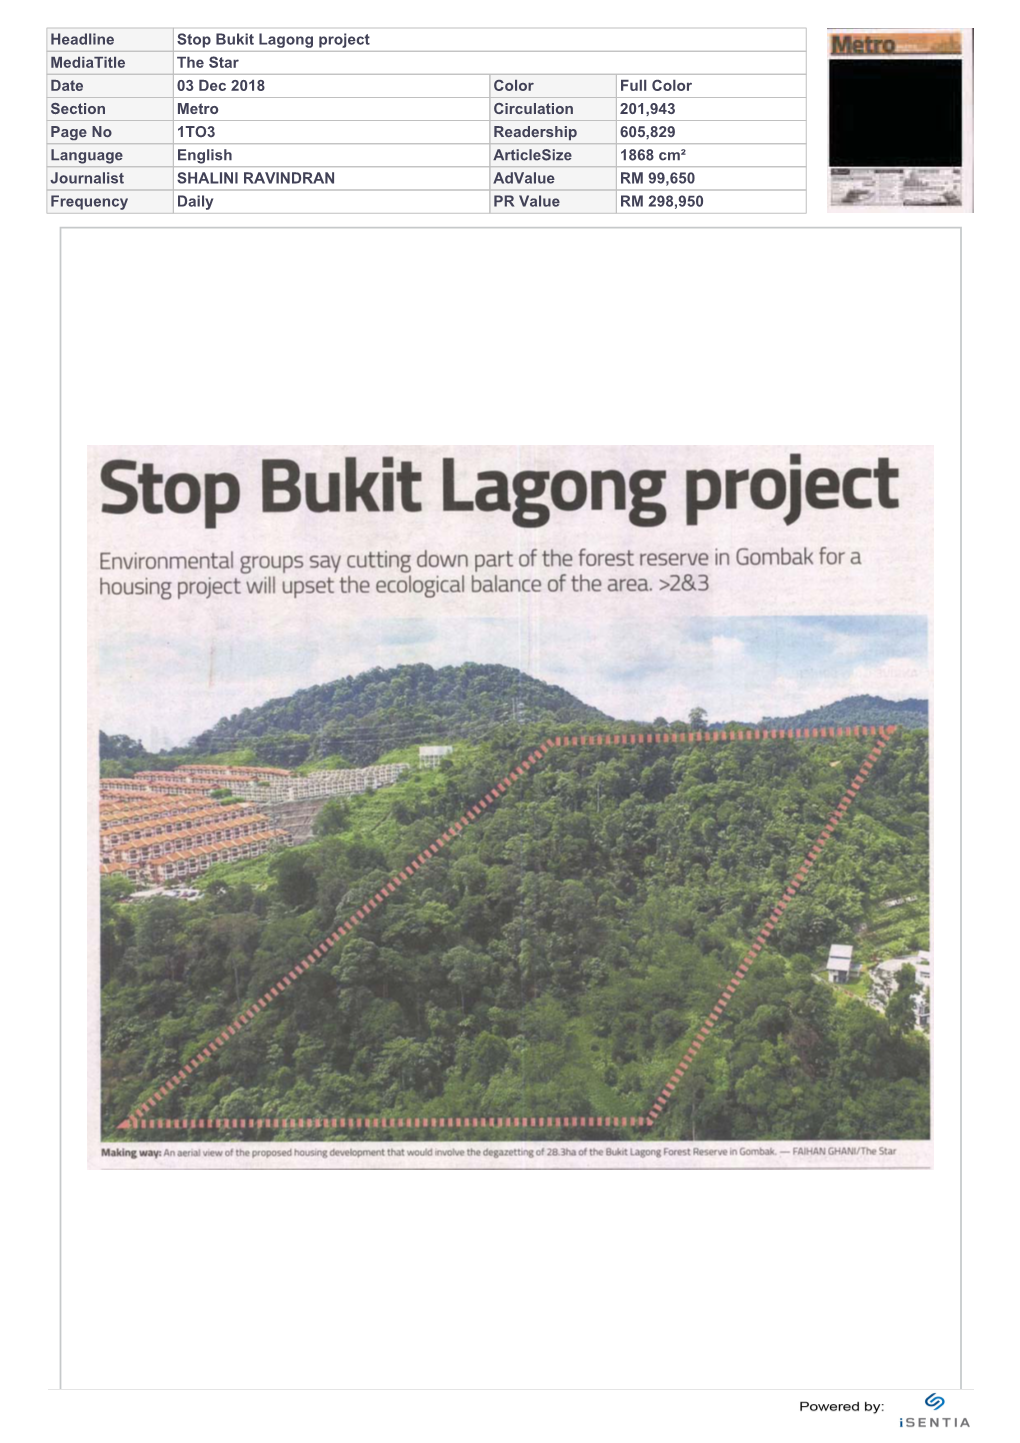 Stop Bukit Lagong Project